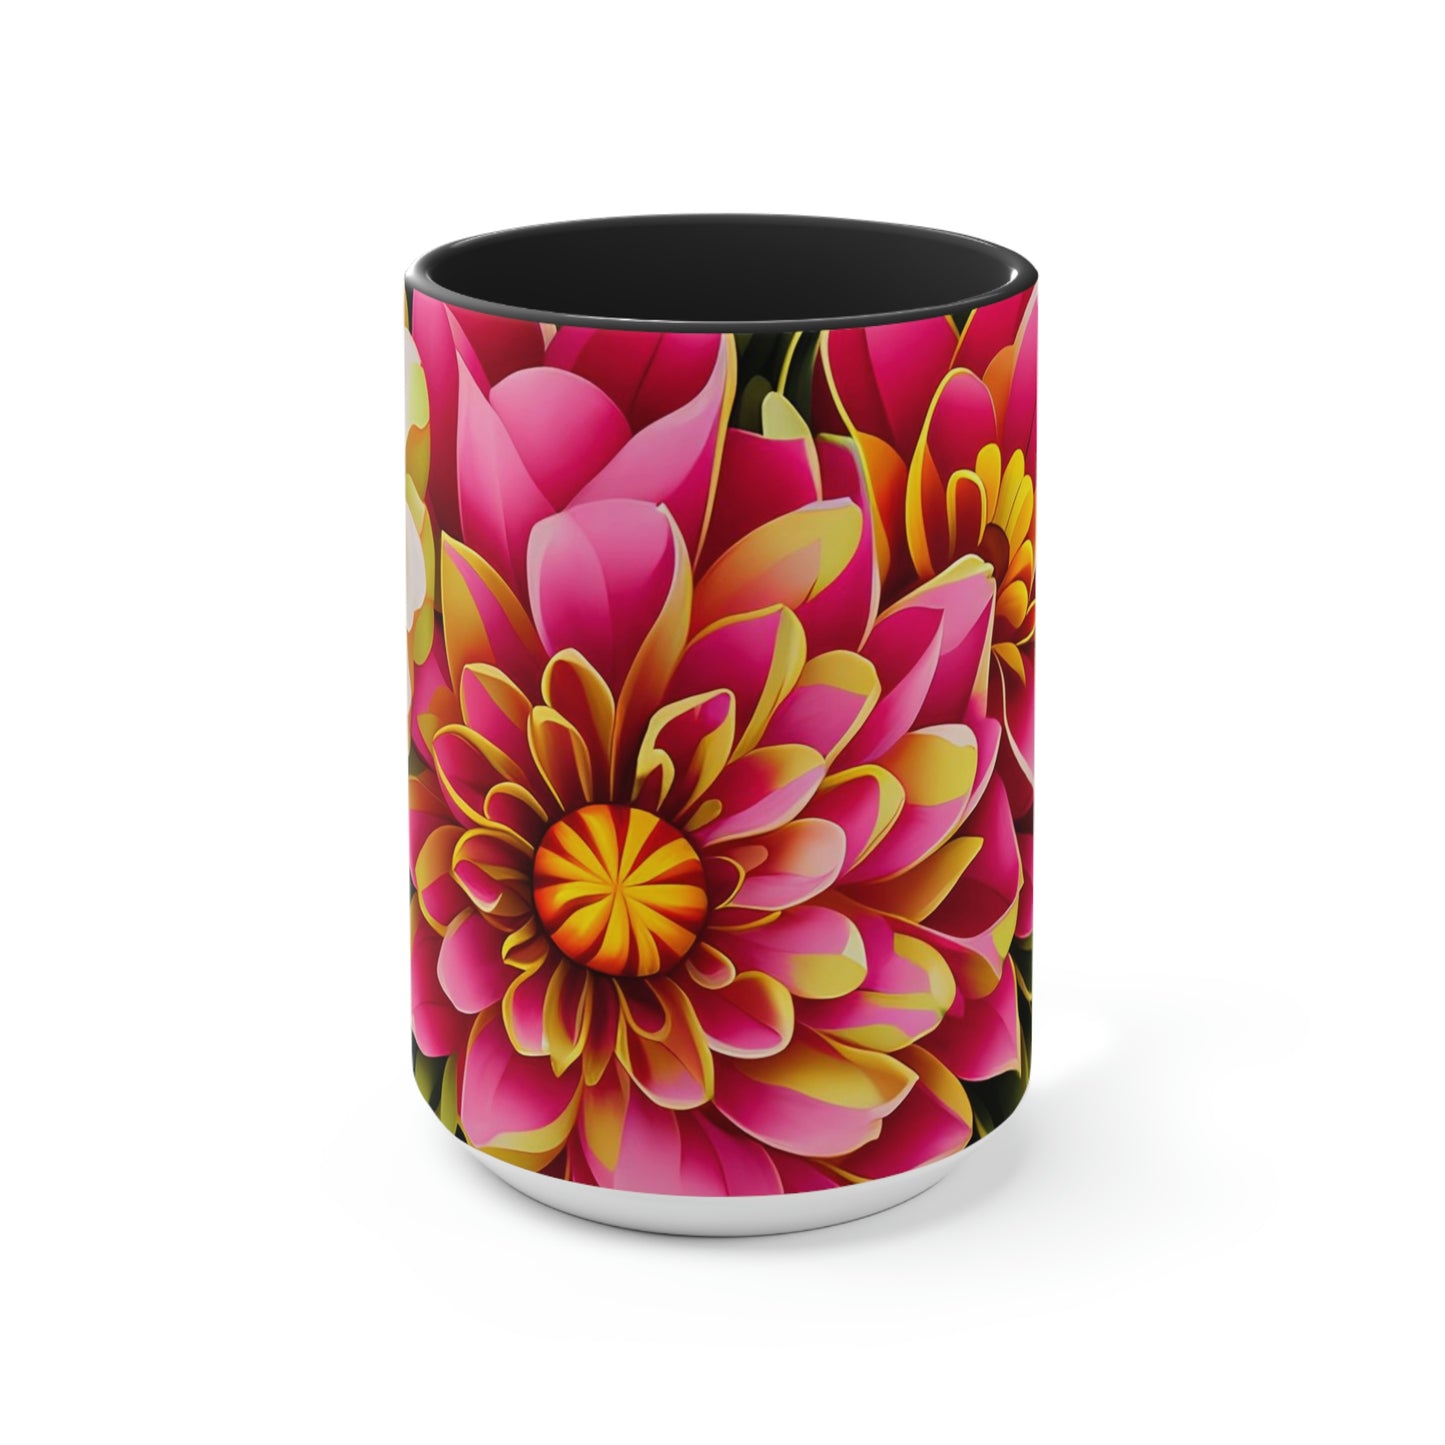 Vibrant Flowers, Ceramic Mug - Perfect for Coffee, Tea, and More!